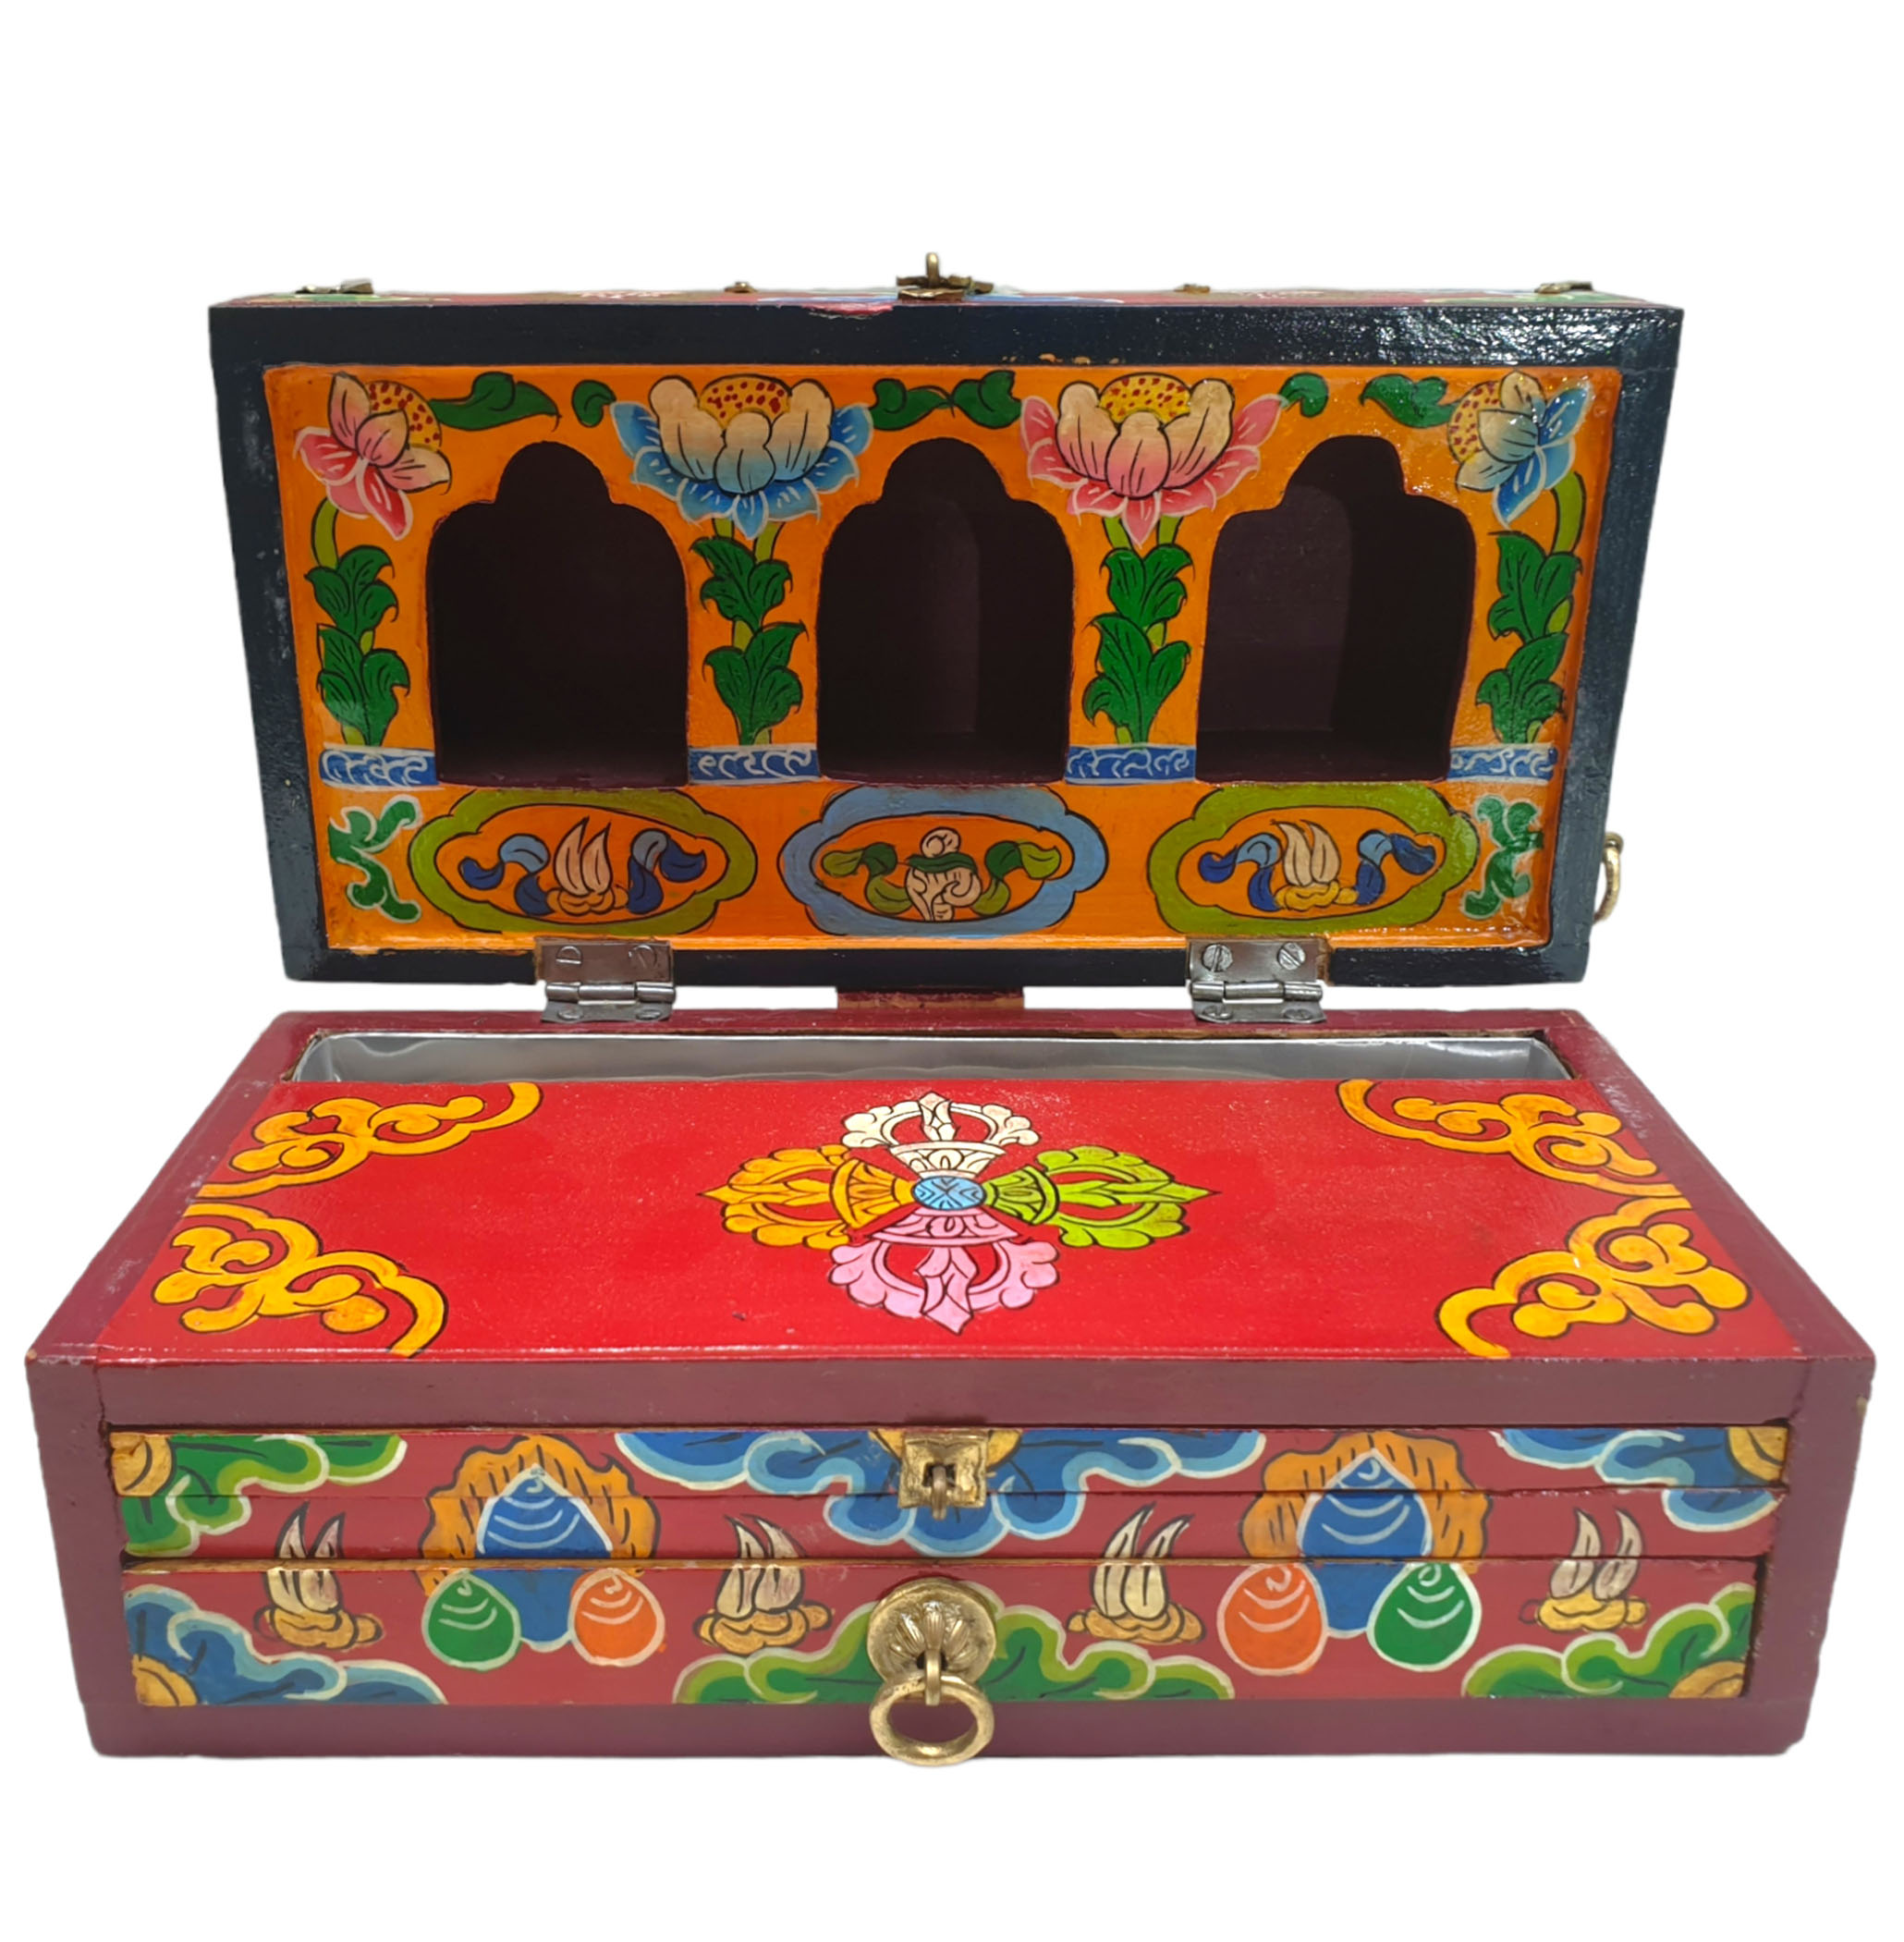 Buddhist Handmade Wooden Traveling Altar chesum Box, foldable, With Buddha, Avloktesvara, & Chengregiz